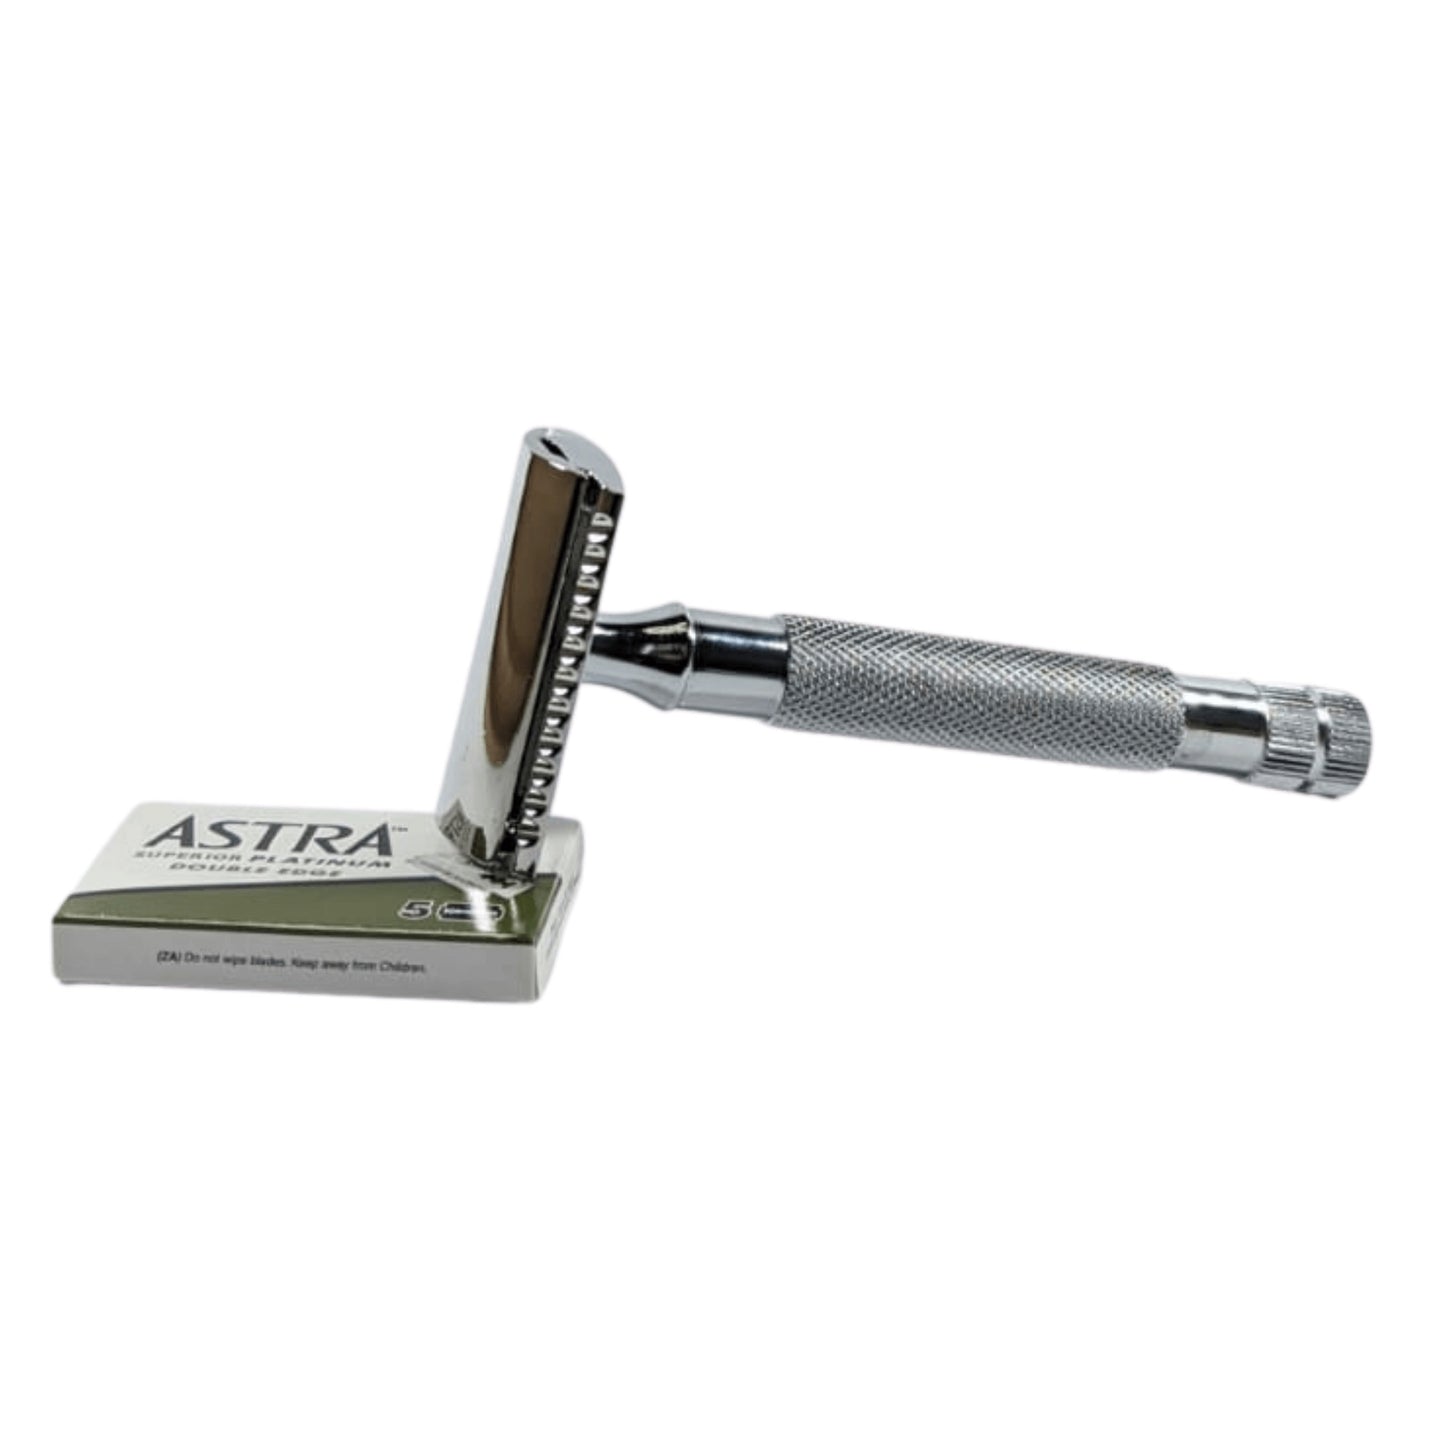 Beard & Blade chrome long handled safety razor with astra blades